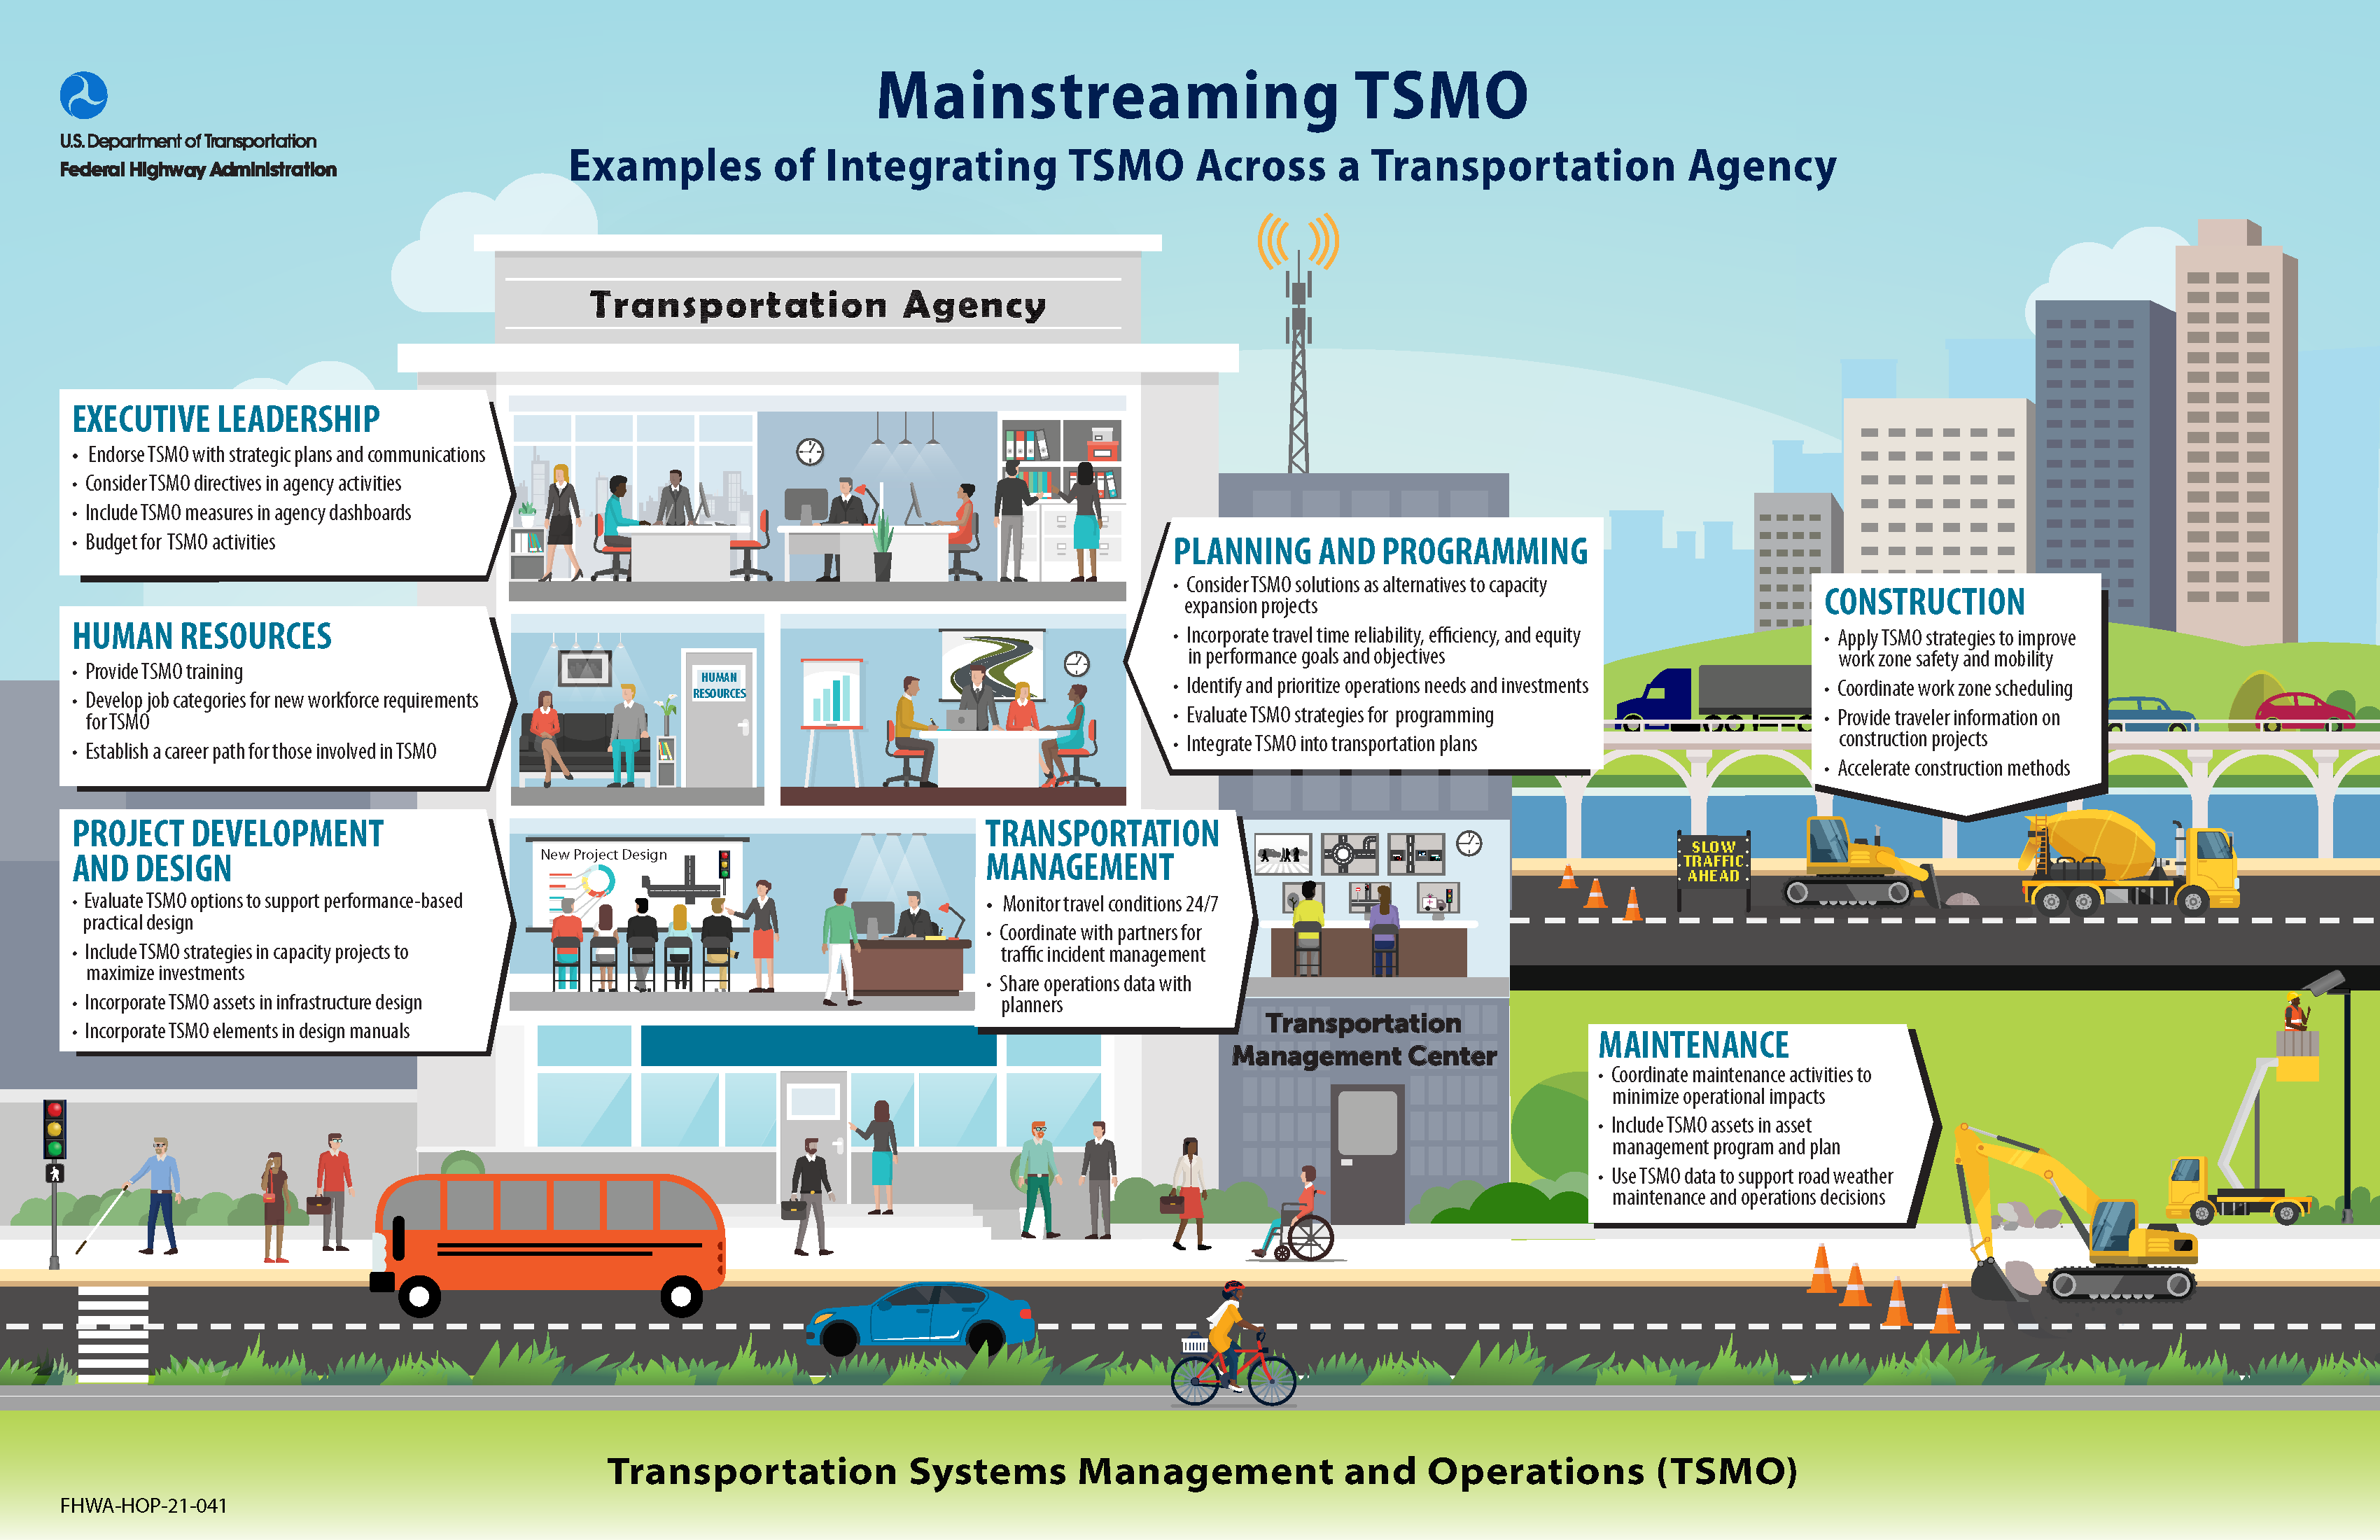 Mainstreaming TSMO graphic